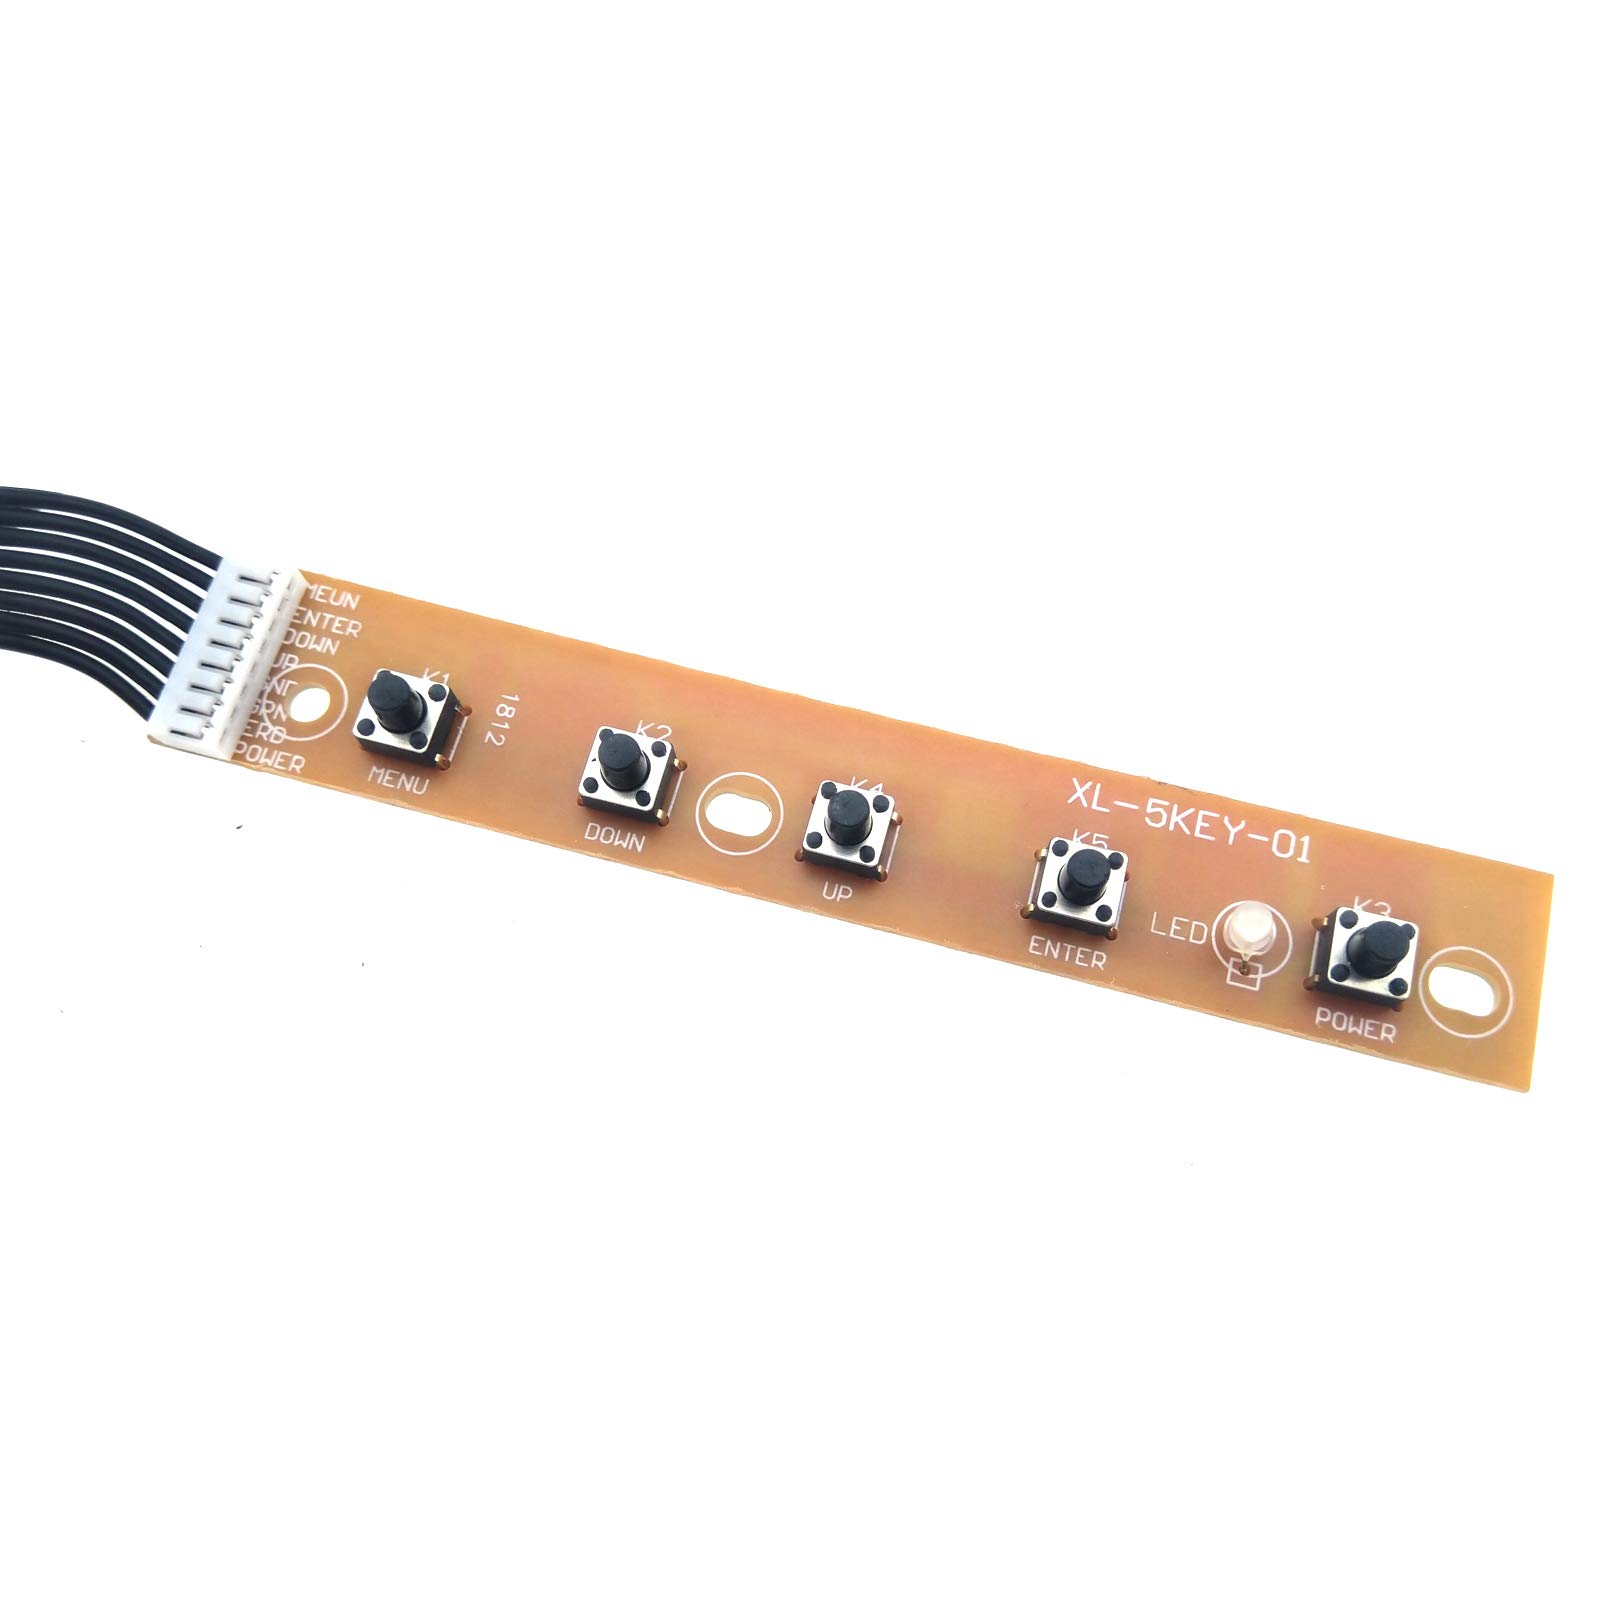 LP156WF6 eDP LCD Panel Control Board Driver Kit 1080P VGA HDMI Video 3.5mm Audio Input